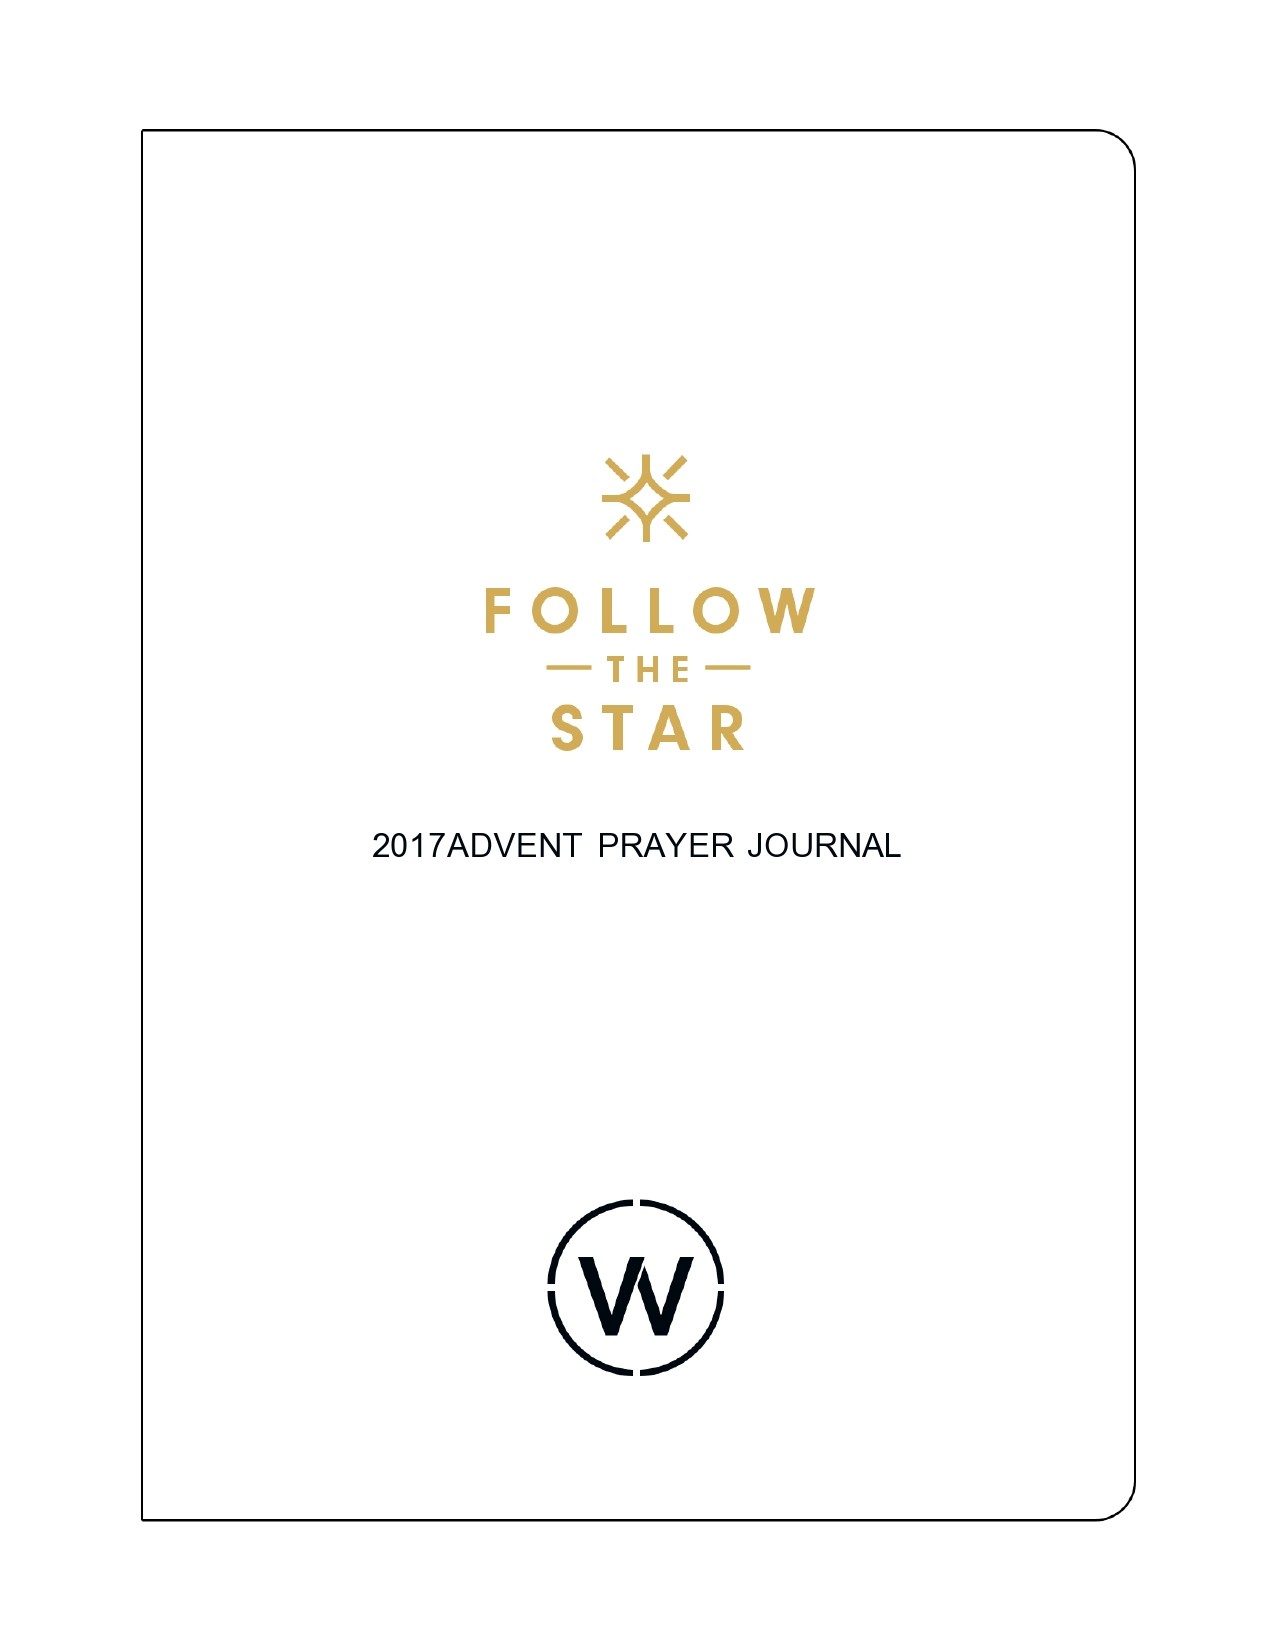 Free prayer journal template 07